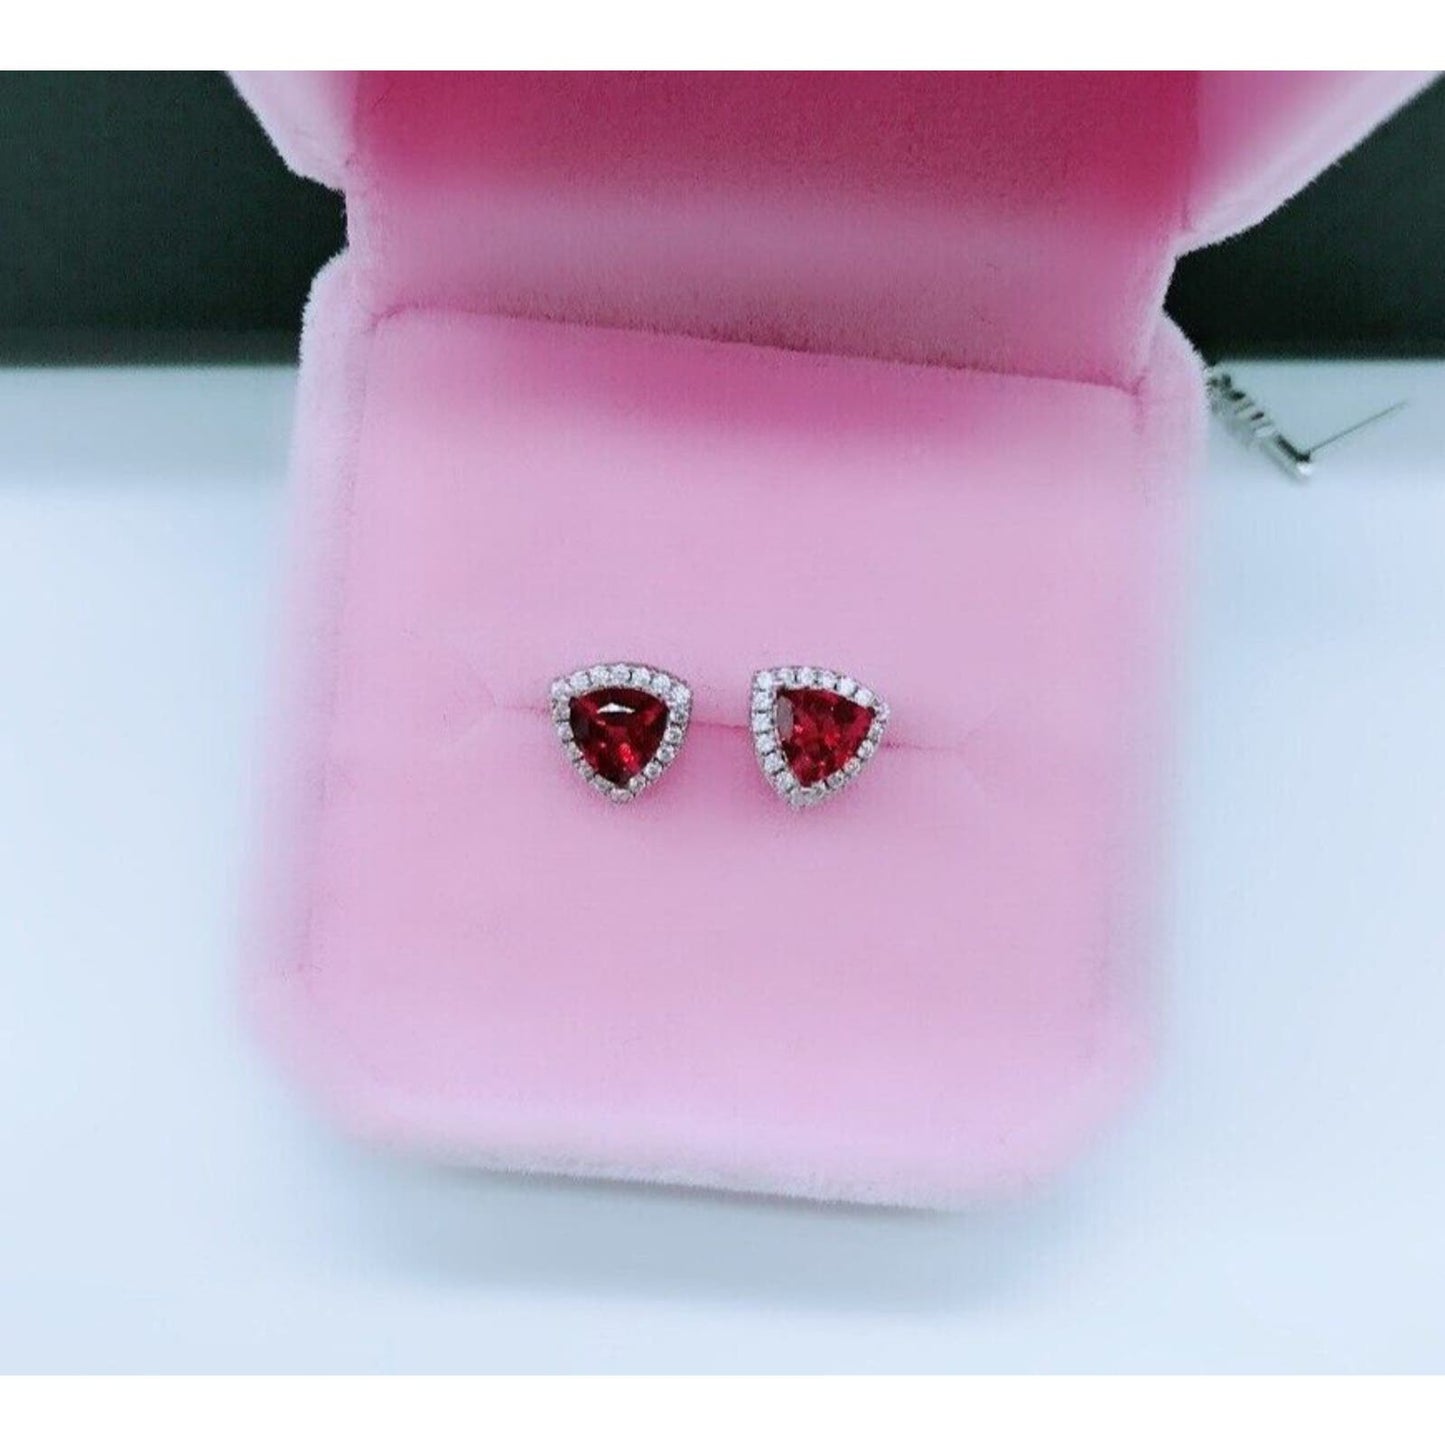 Red Garnet Gemstone Trillion Cut Stud Earrings 5mm